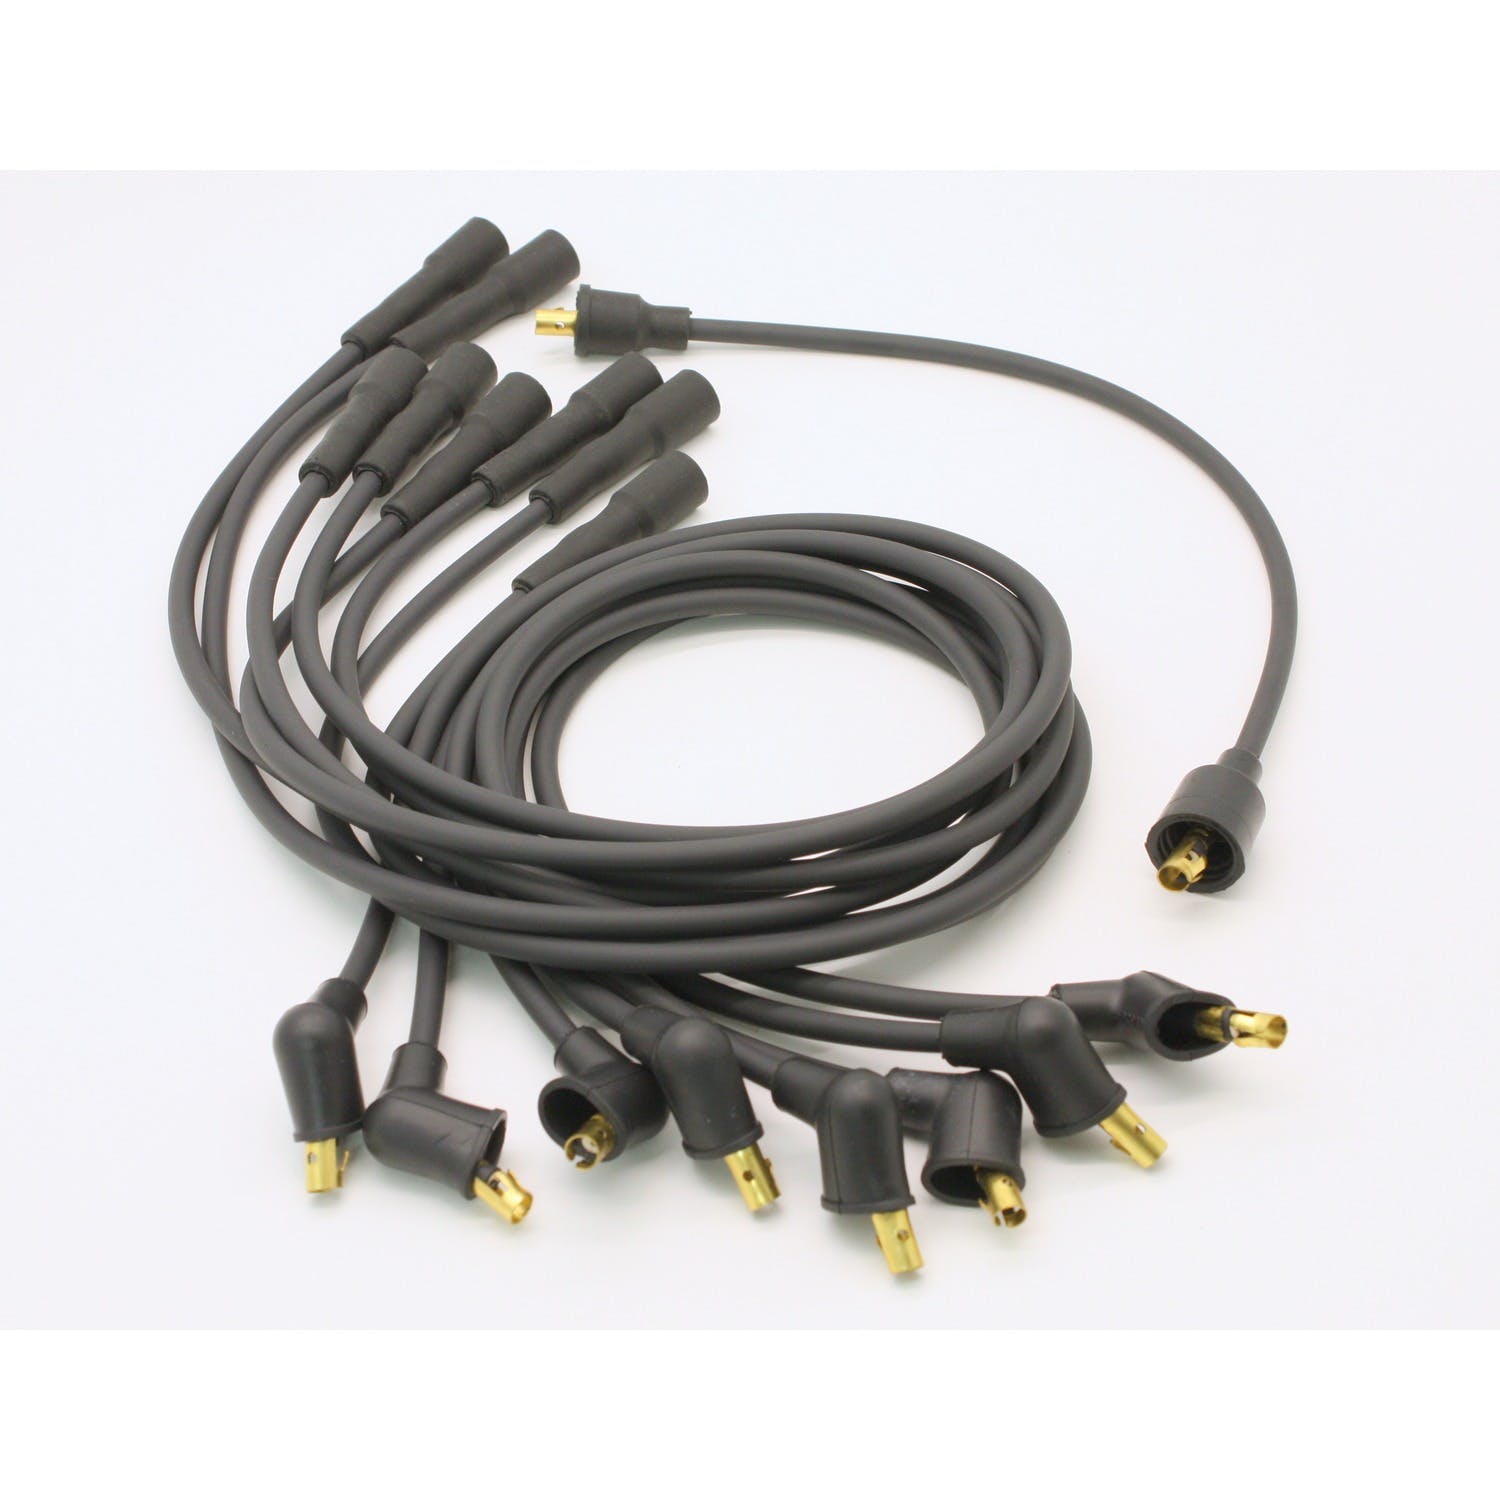 PerTronix 708104 Spark Plug Wire Set